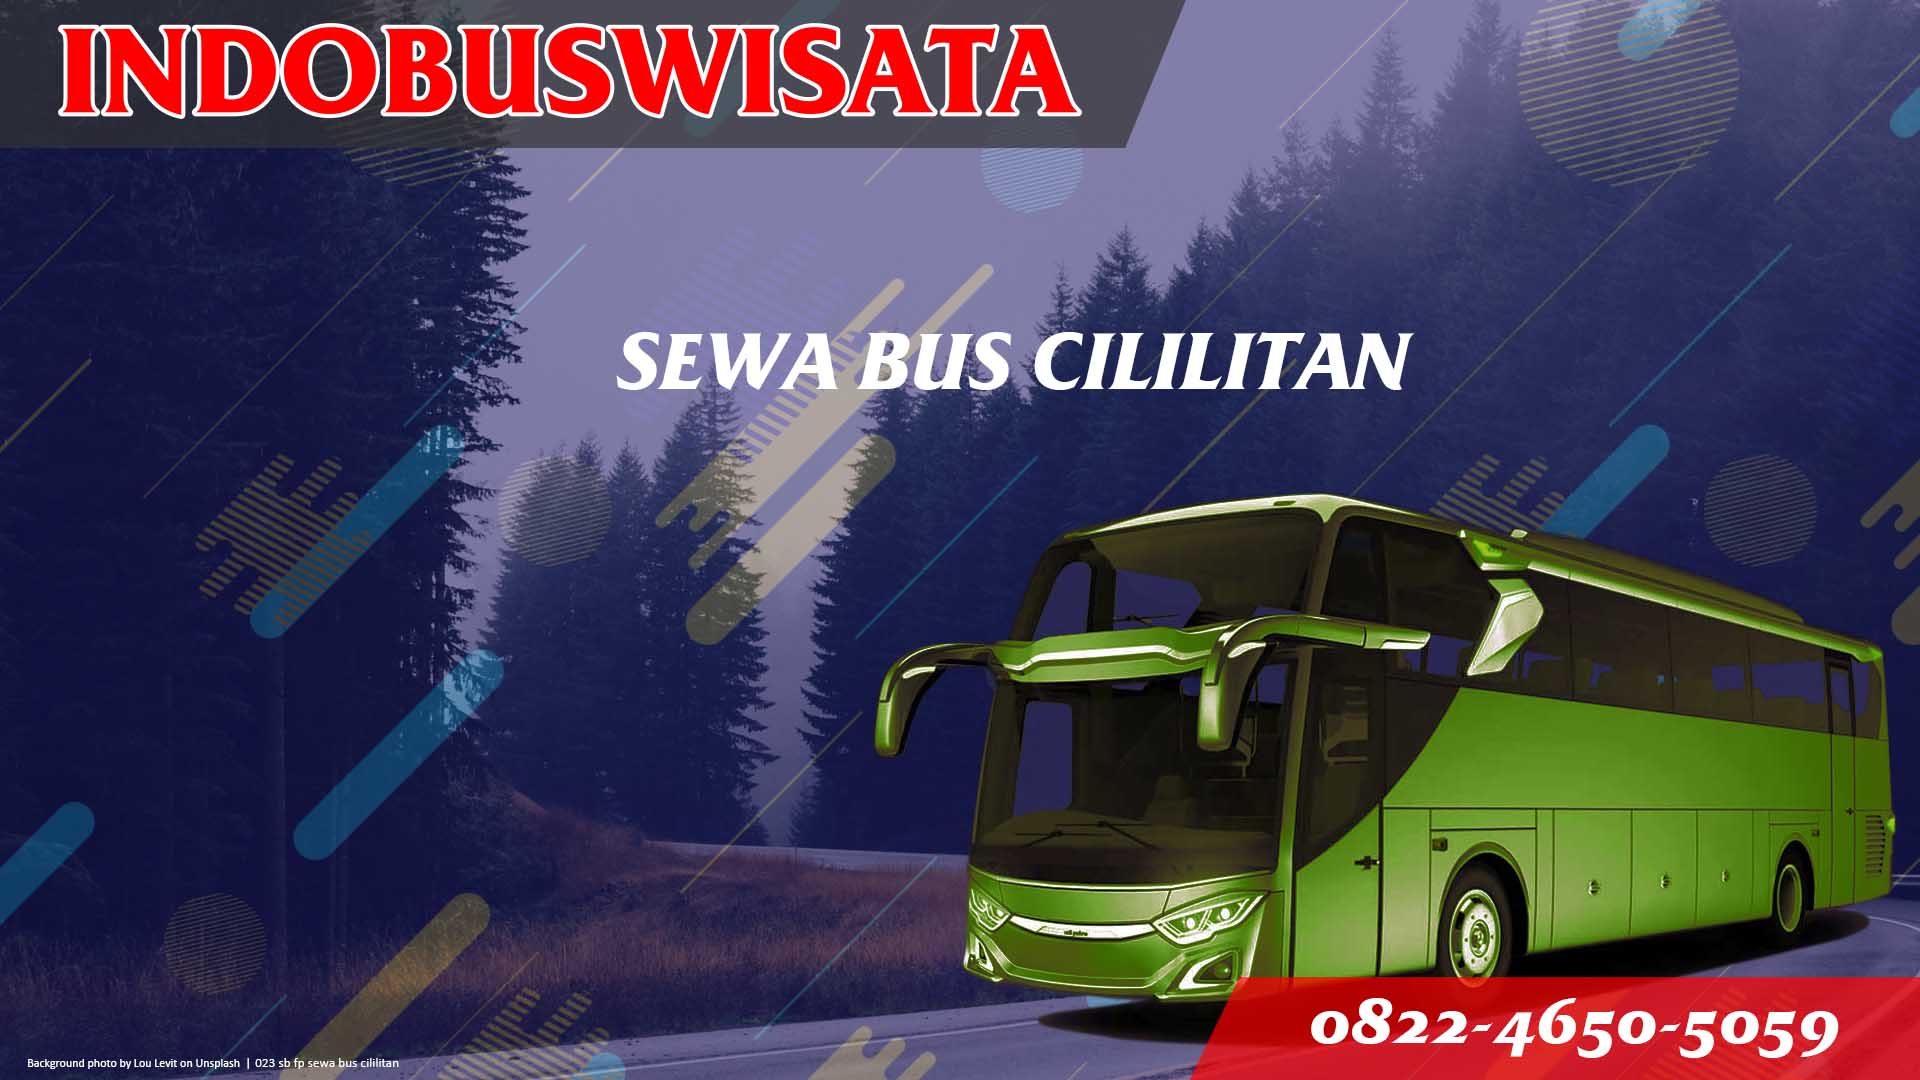 023 Sb Fp Sewa Bus Cililitan Jb 3 Hdd Indobuswisata